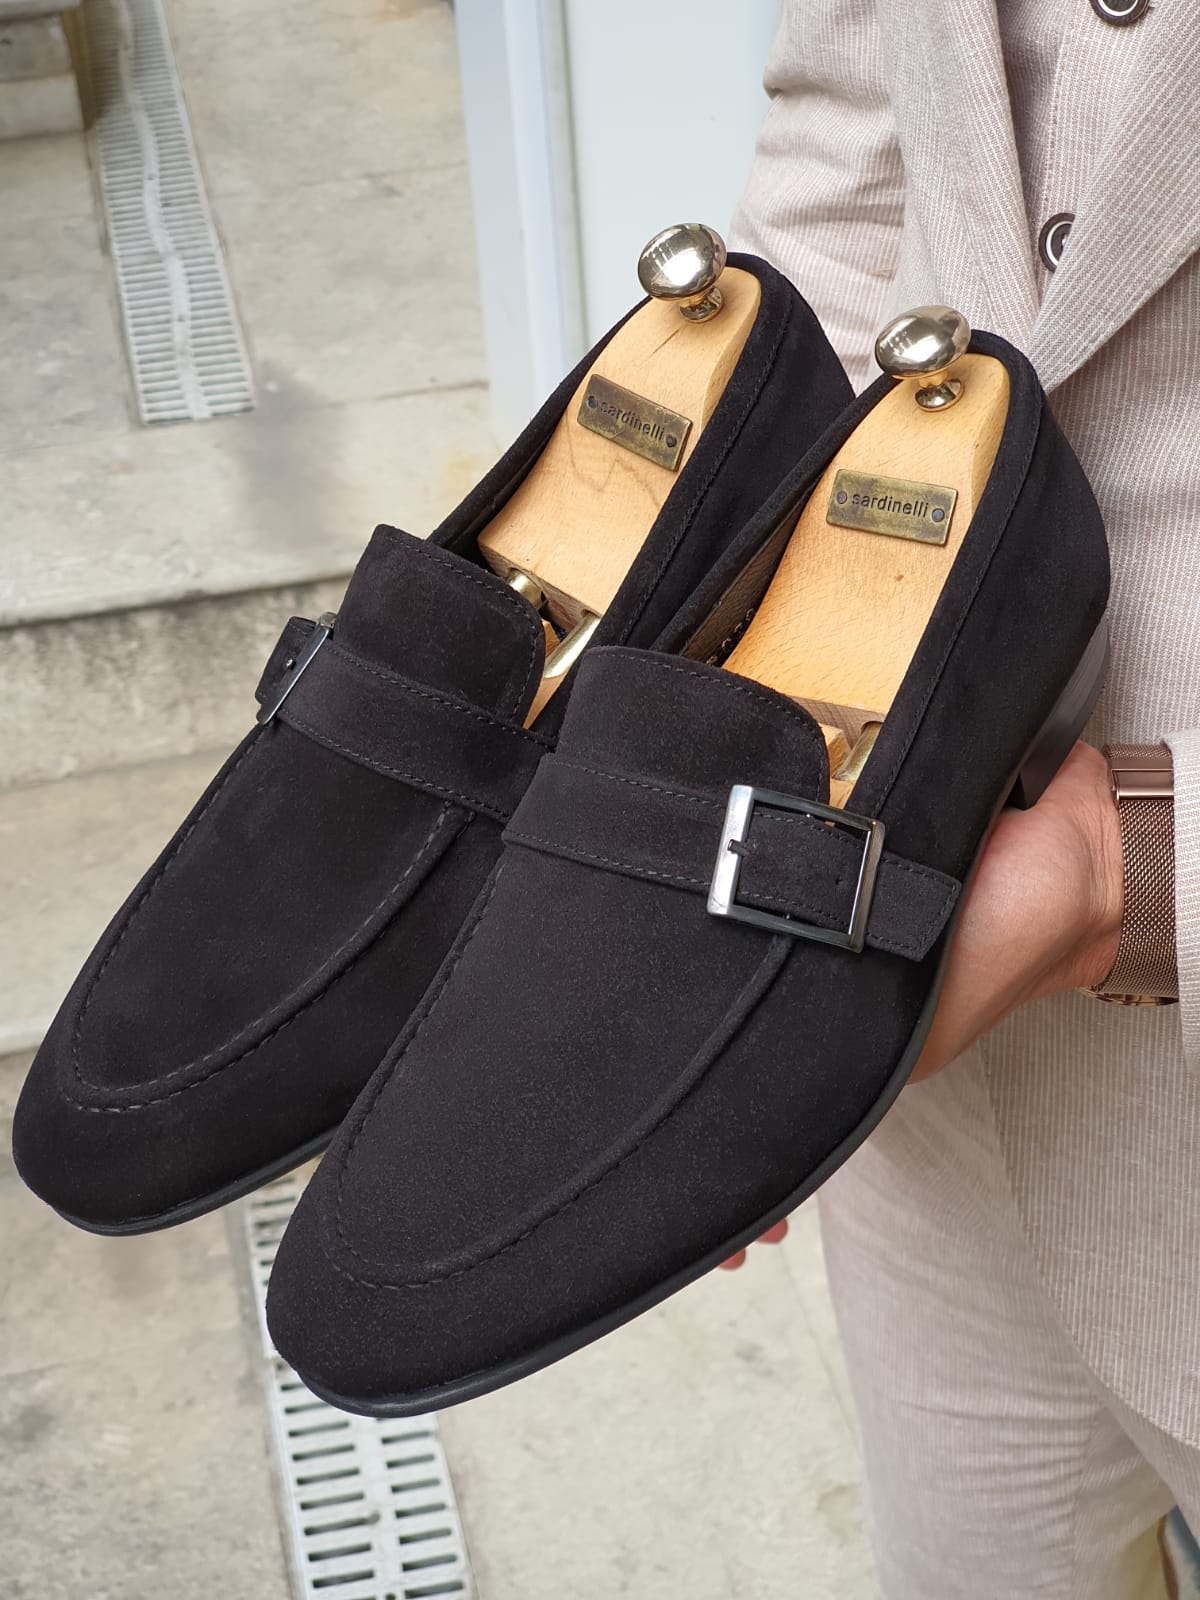 Uredelighed fjer berømmelse Buy Black Suede Buckle Loafers by Sardinelli | Free Worldwide Shipping